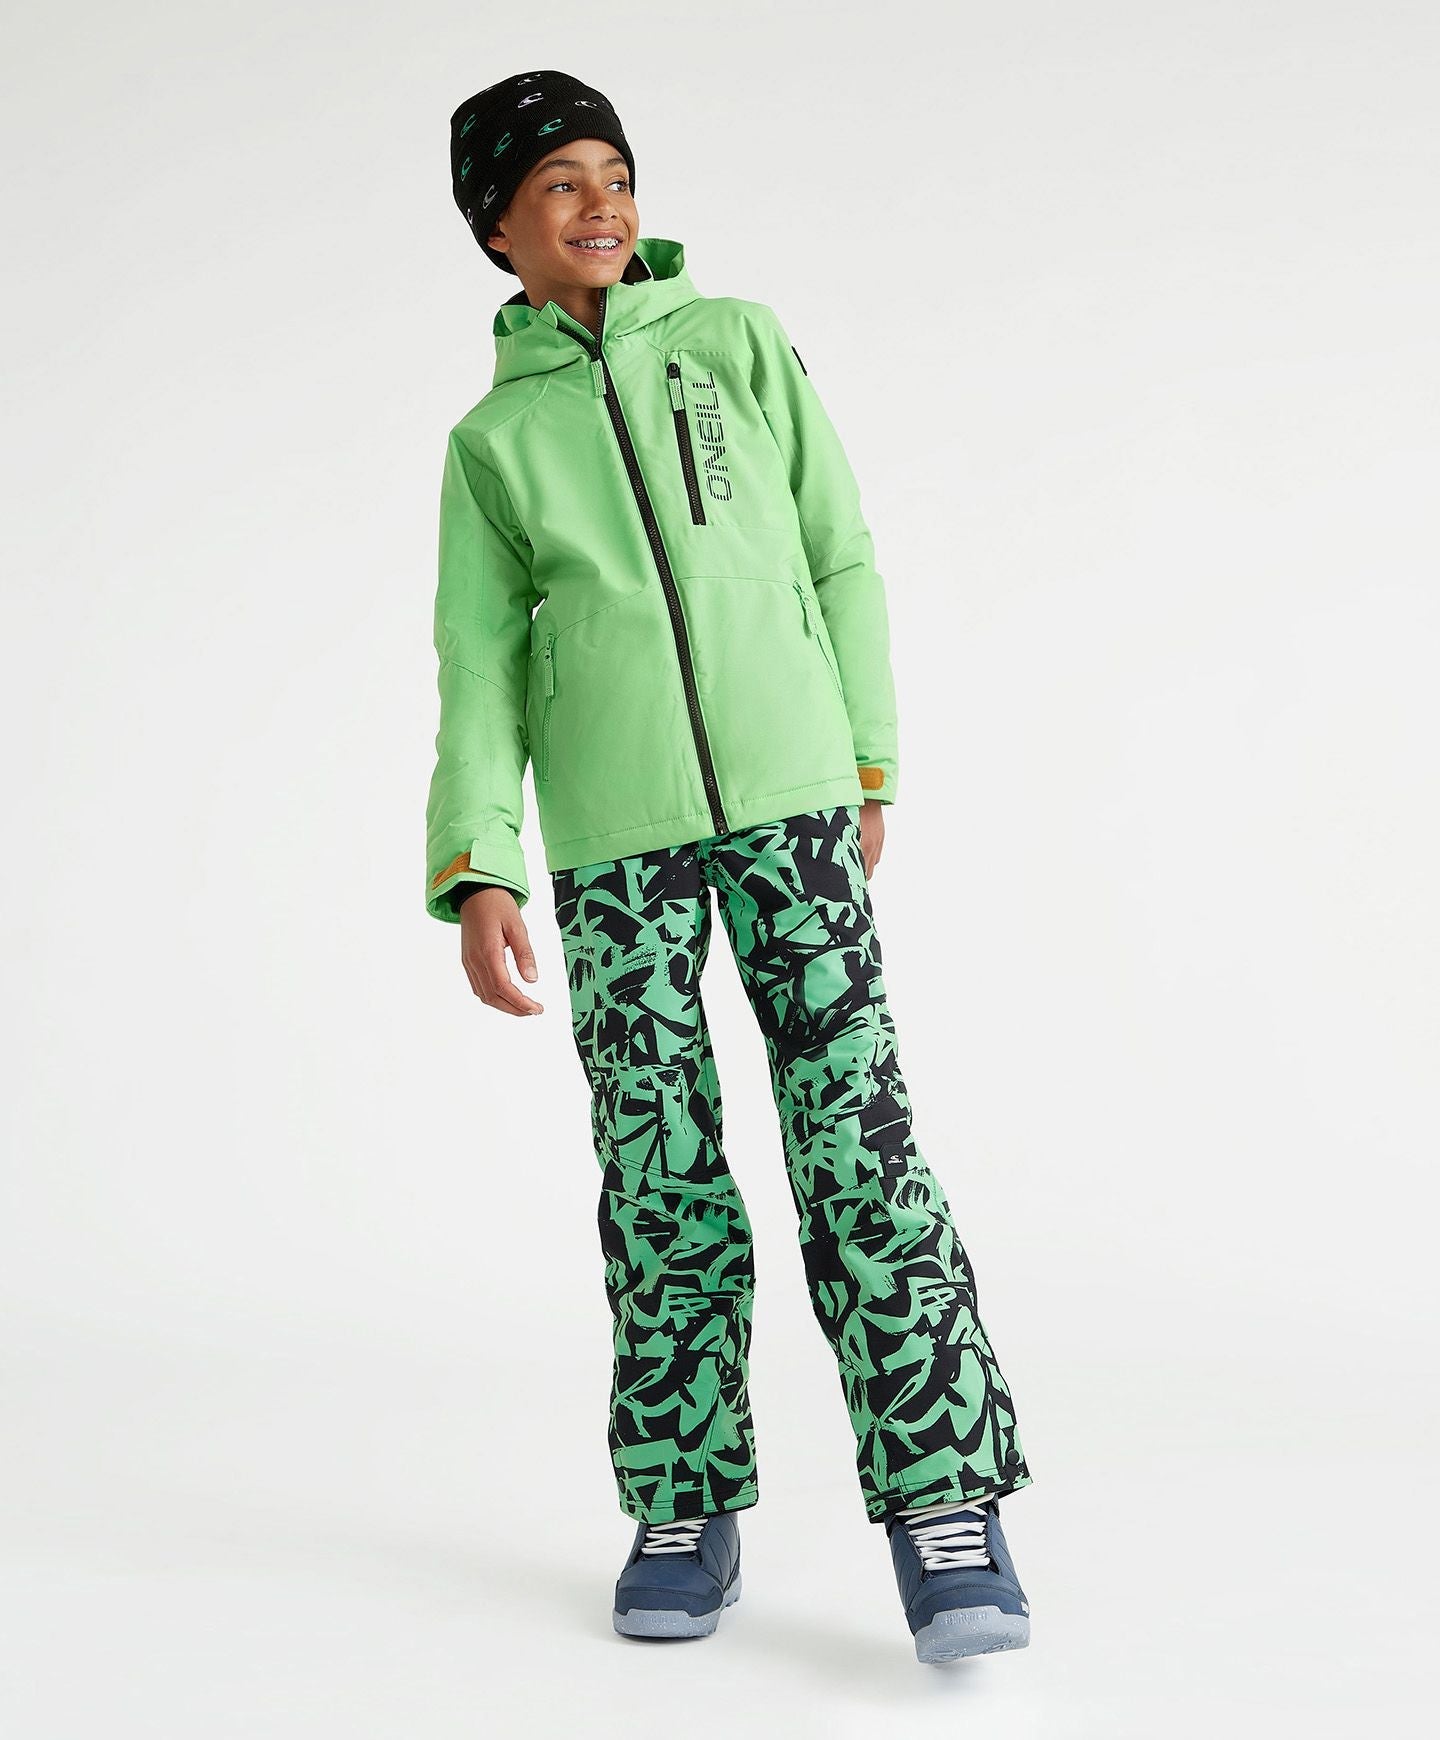 Boy's Hammer Snow Jacket - Luminous Green